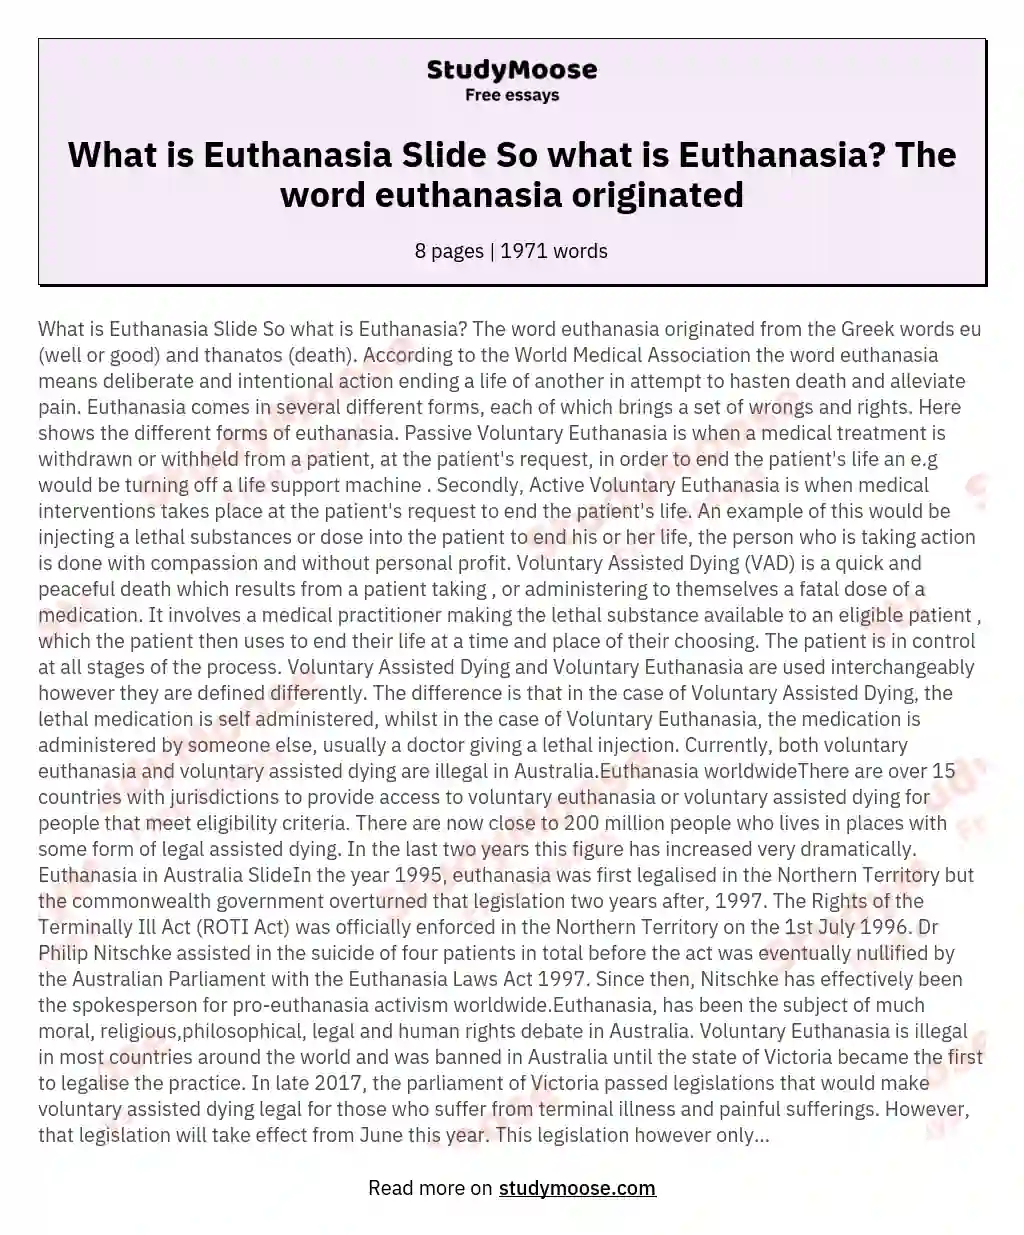 What is Euthanasia Slide So what is Euthanasia? The word euthanasia originated